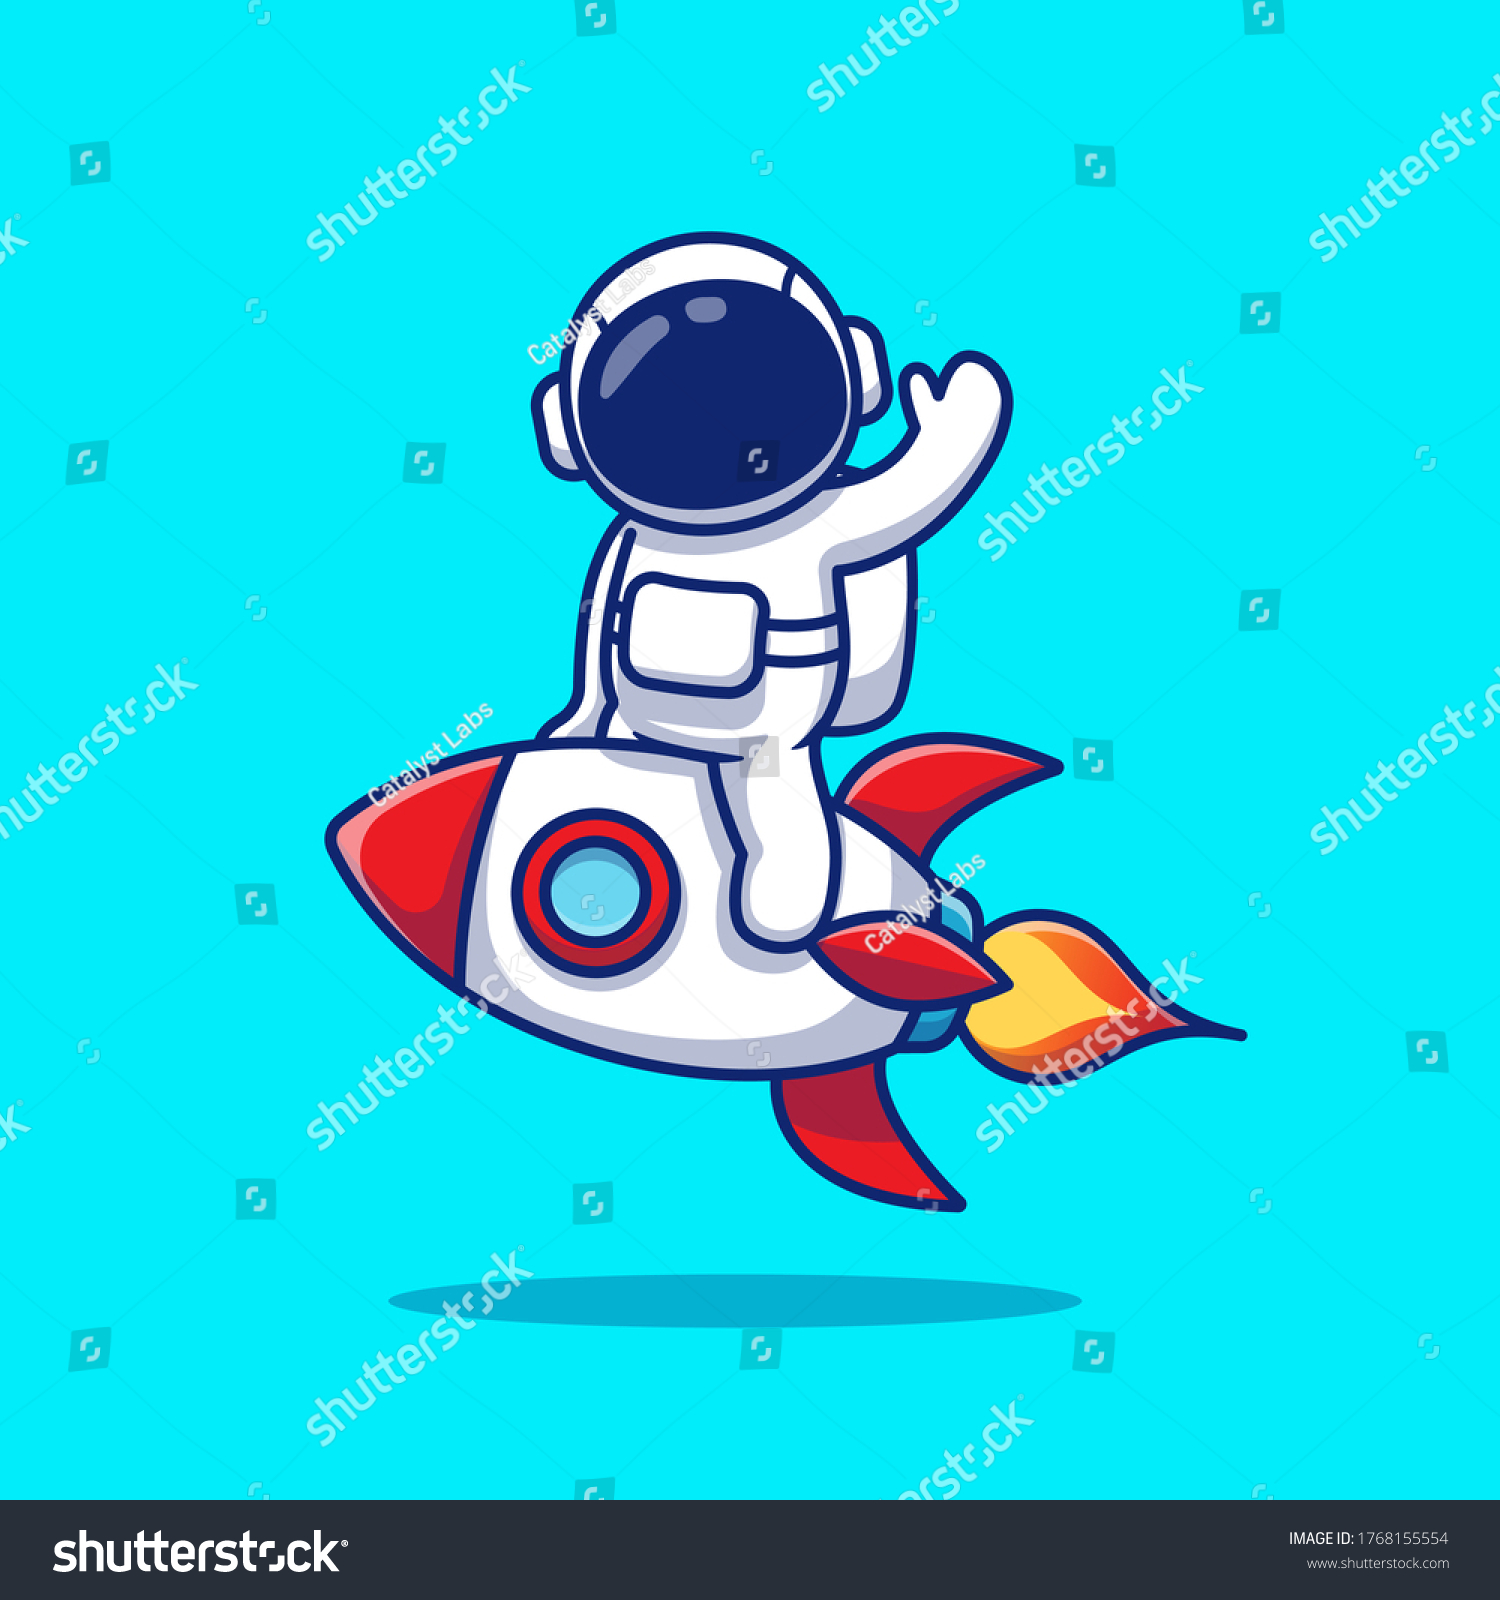 Cute Astronaut Riding Rocket Waving Hand: стоковая векторная графика (без л...